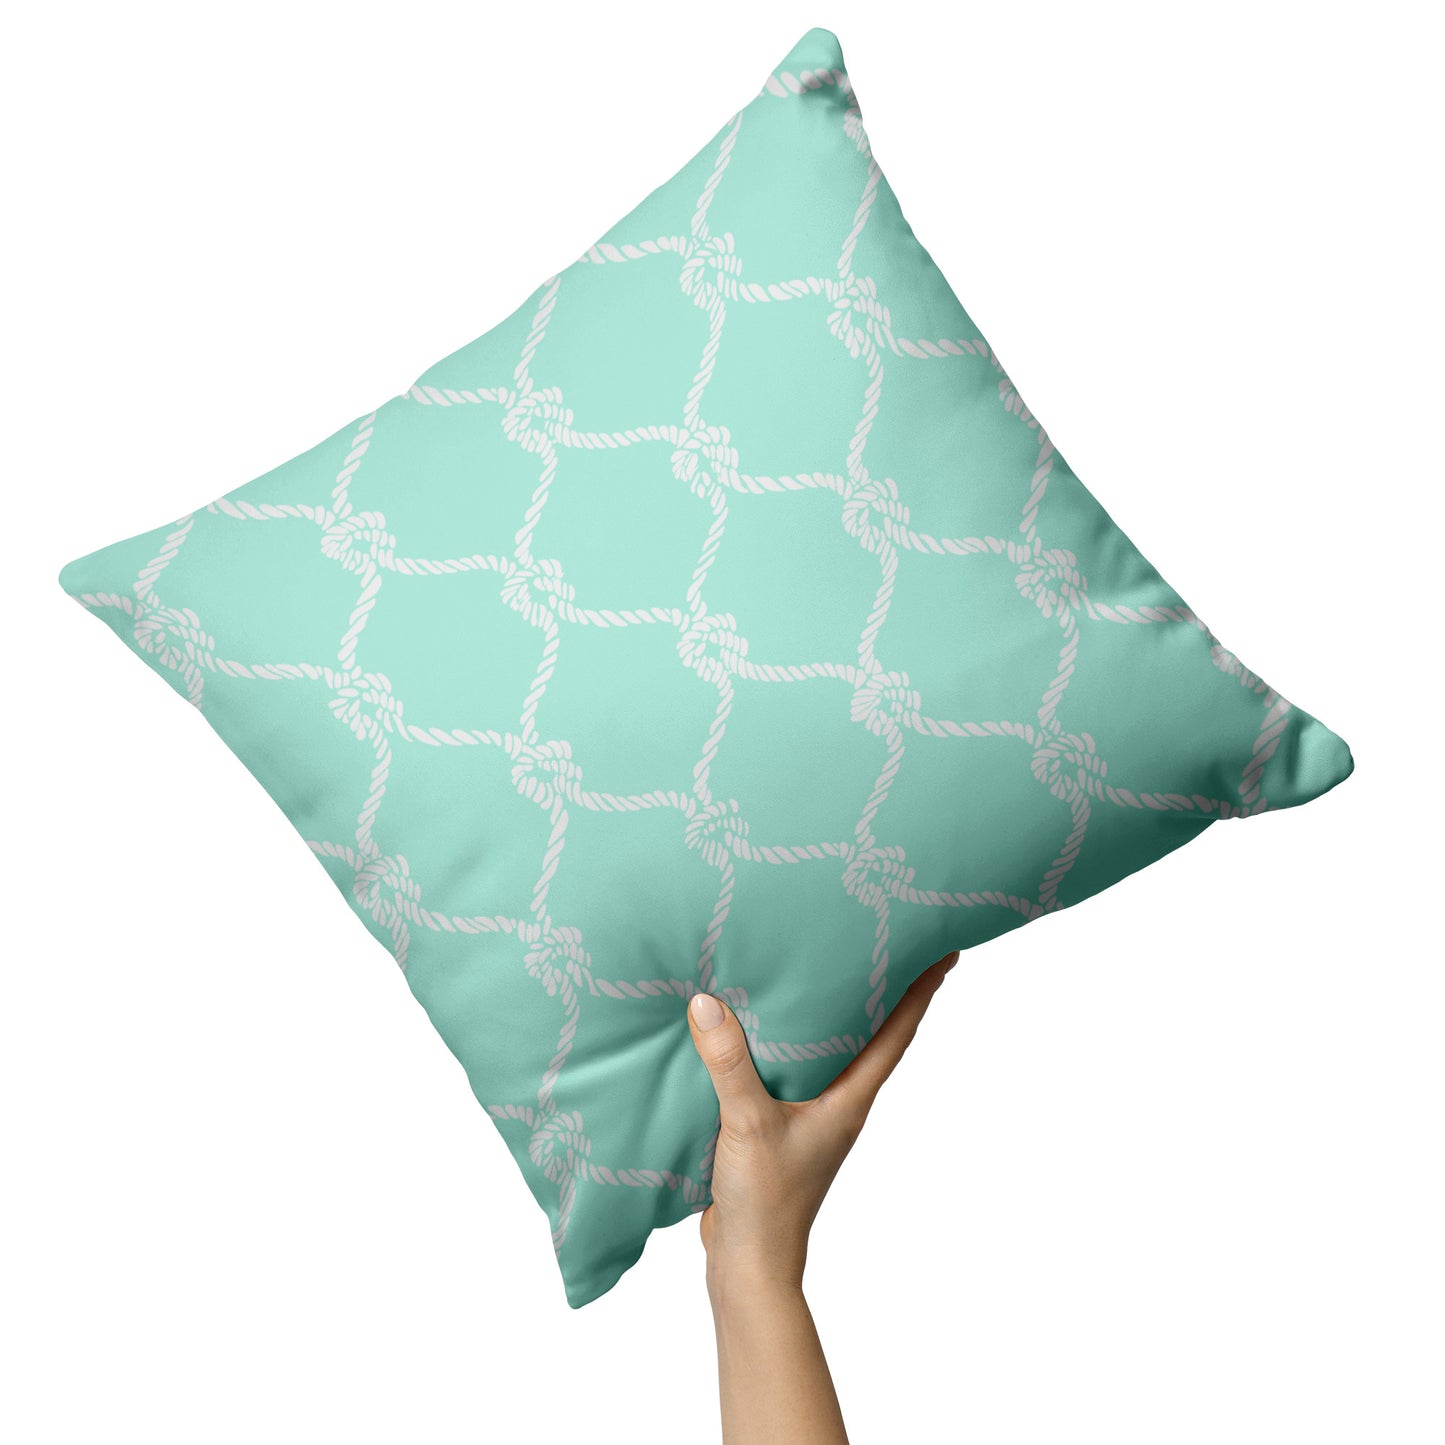 Nautical Netting Design on Mint Background, Throw Pillow